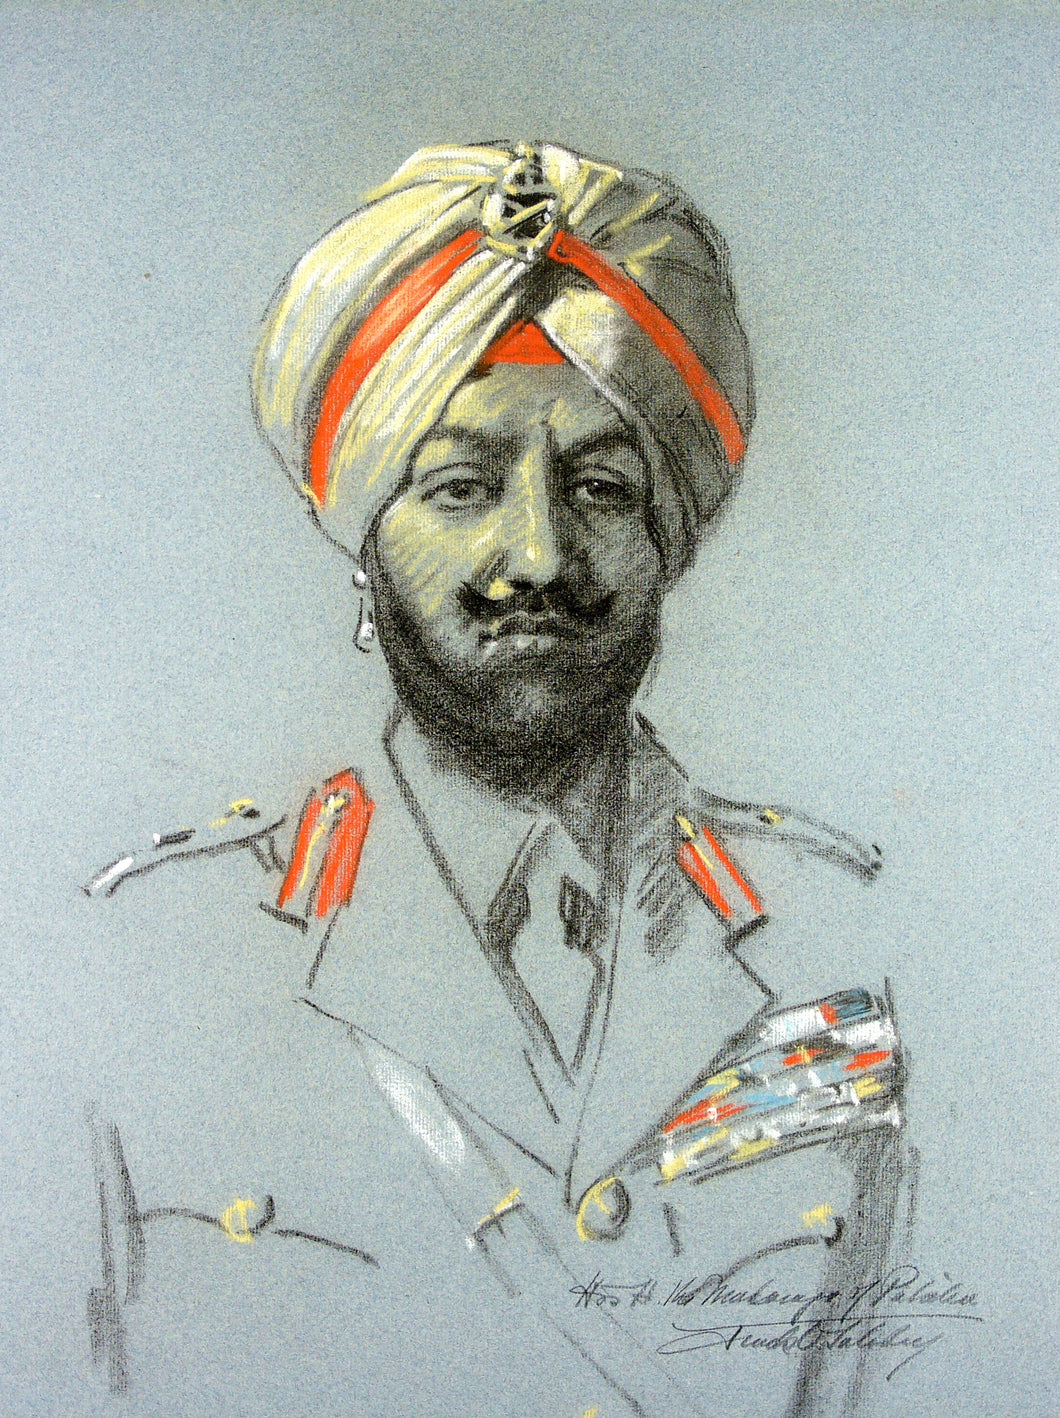 Portrait of The Maharajah of Patiala by Frank Salisbury, 1935